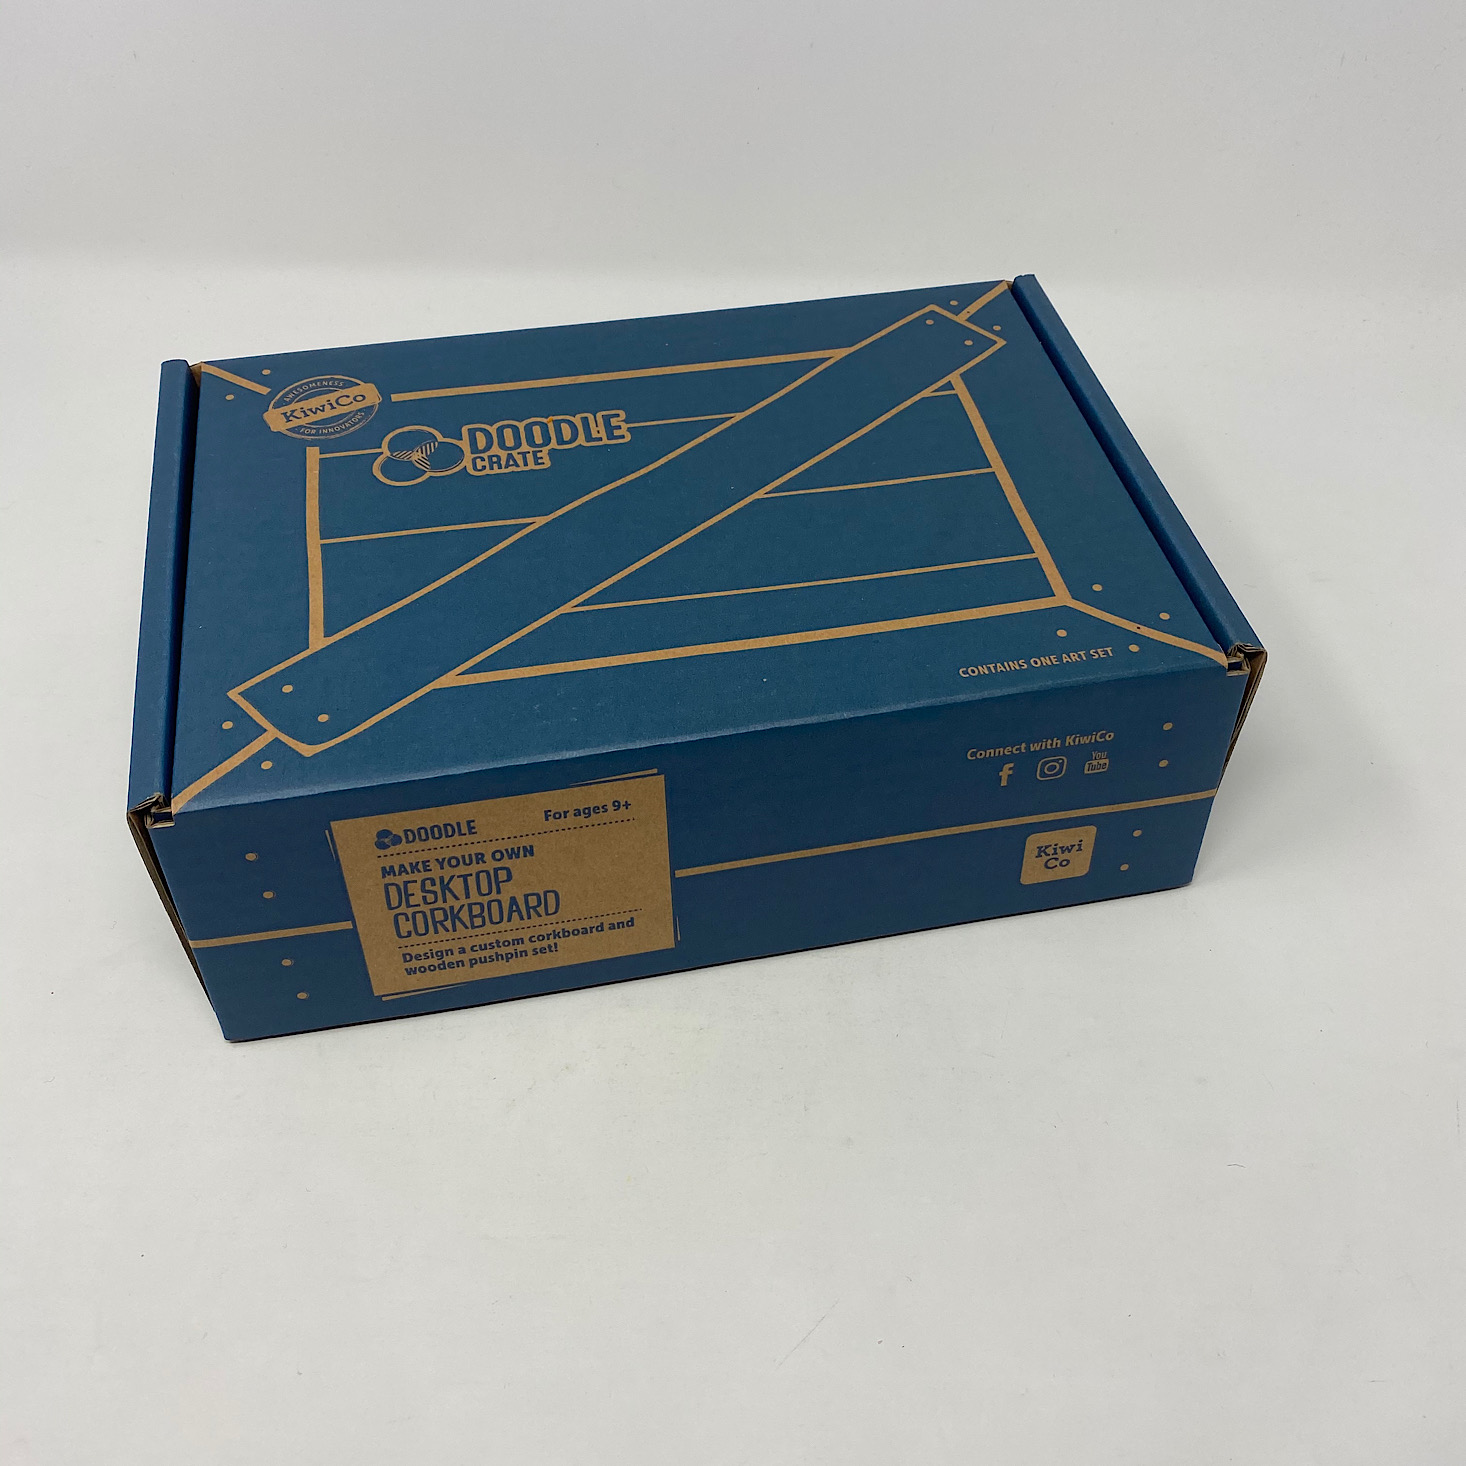 KiwiCo Doodle Crate Review + Coupon – Desktop Corkboard